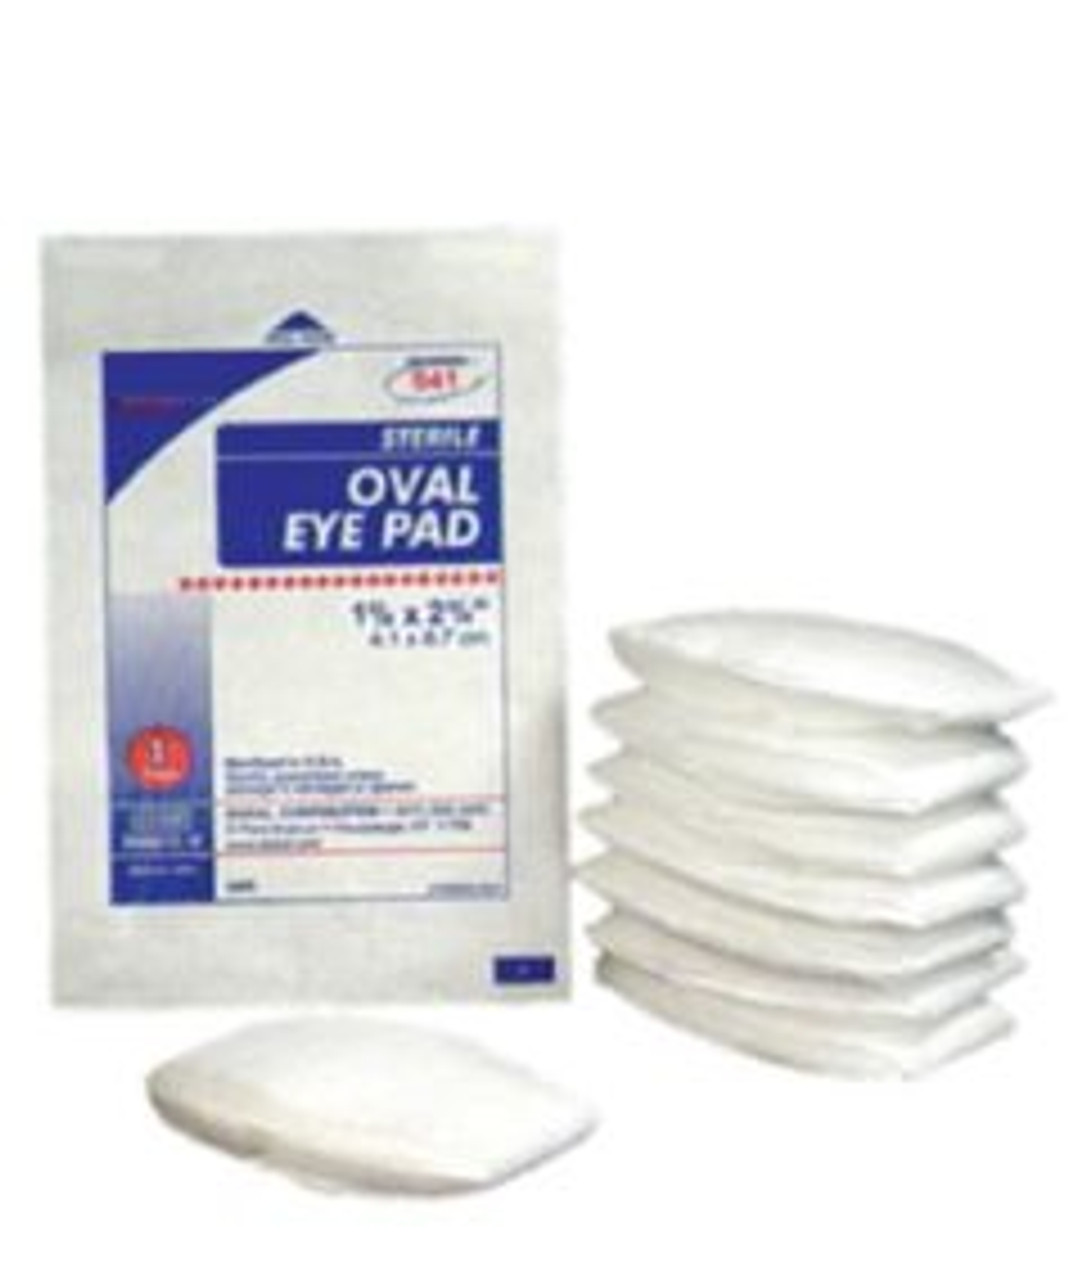  Dukal Eye Pads. Pack of 50 Sterile Pads for Eye